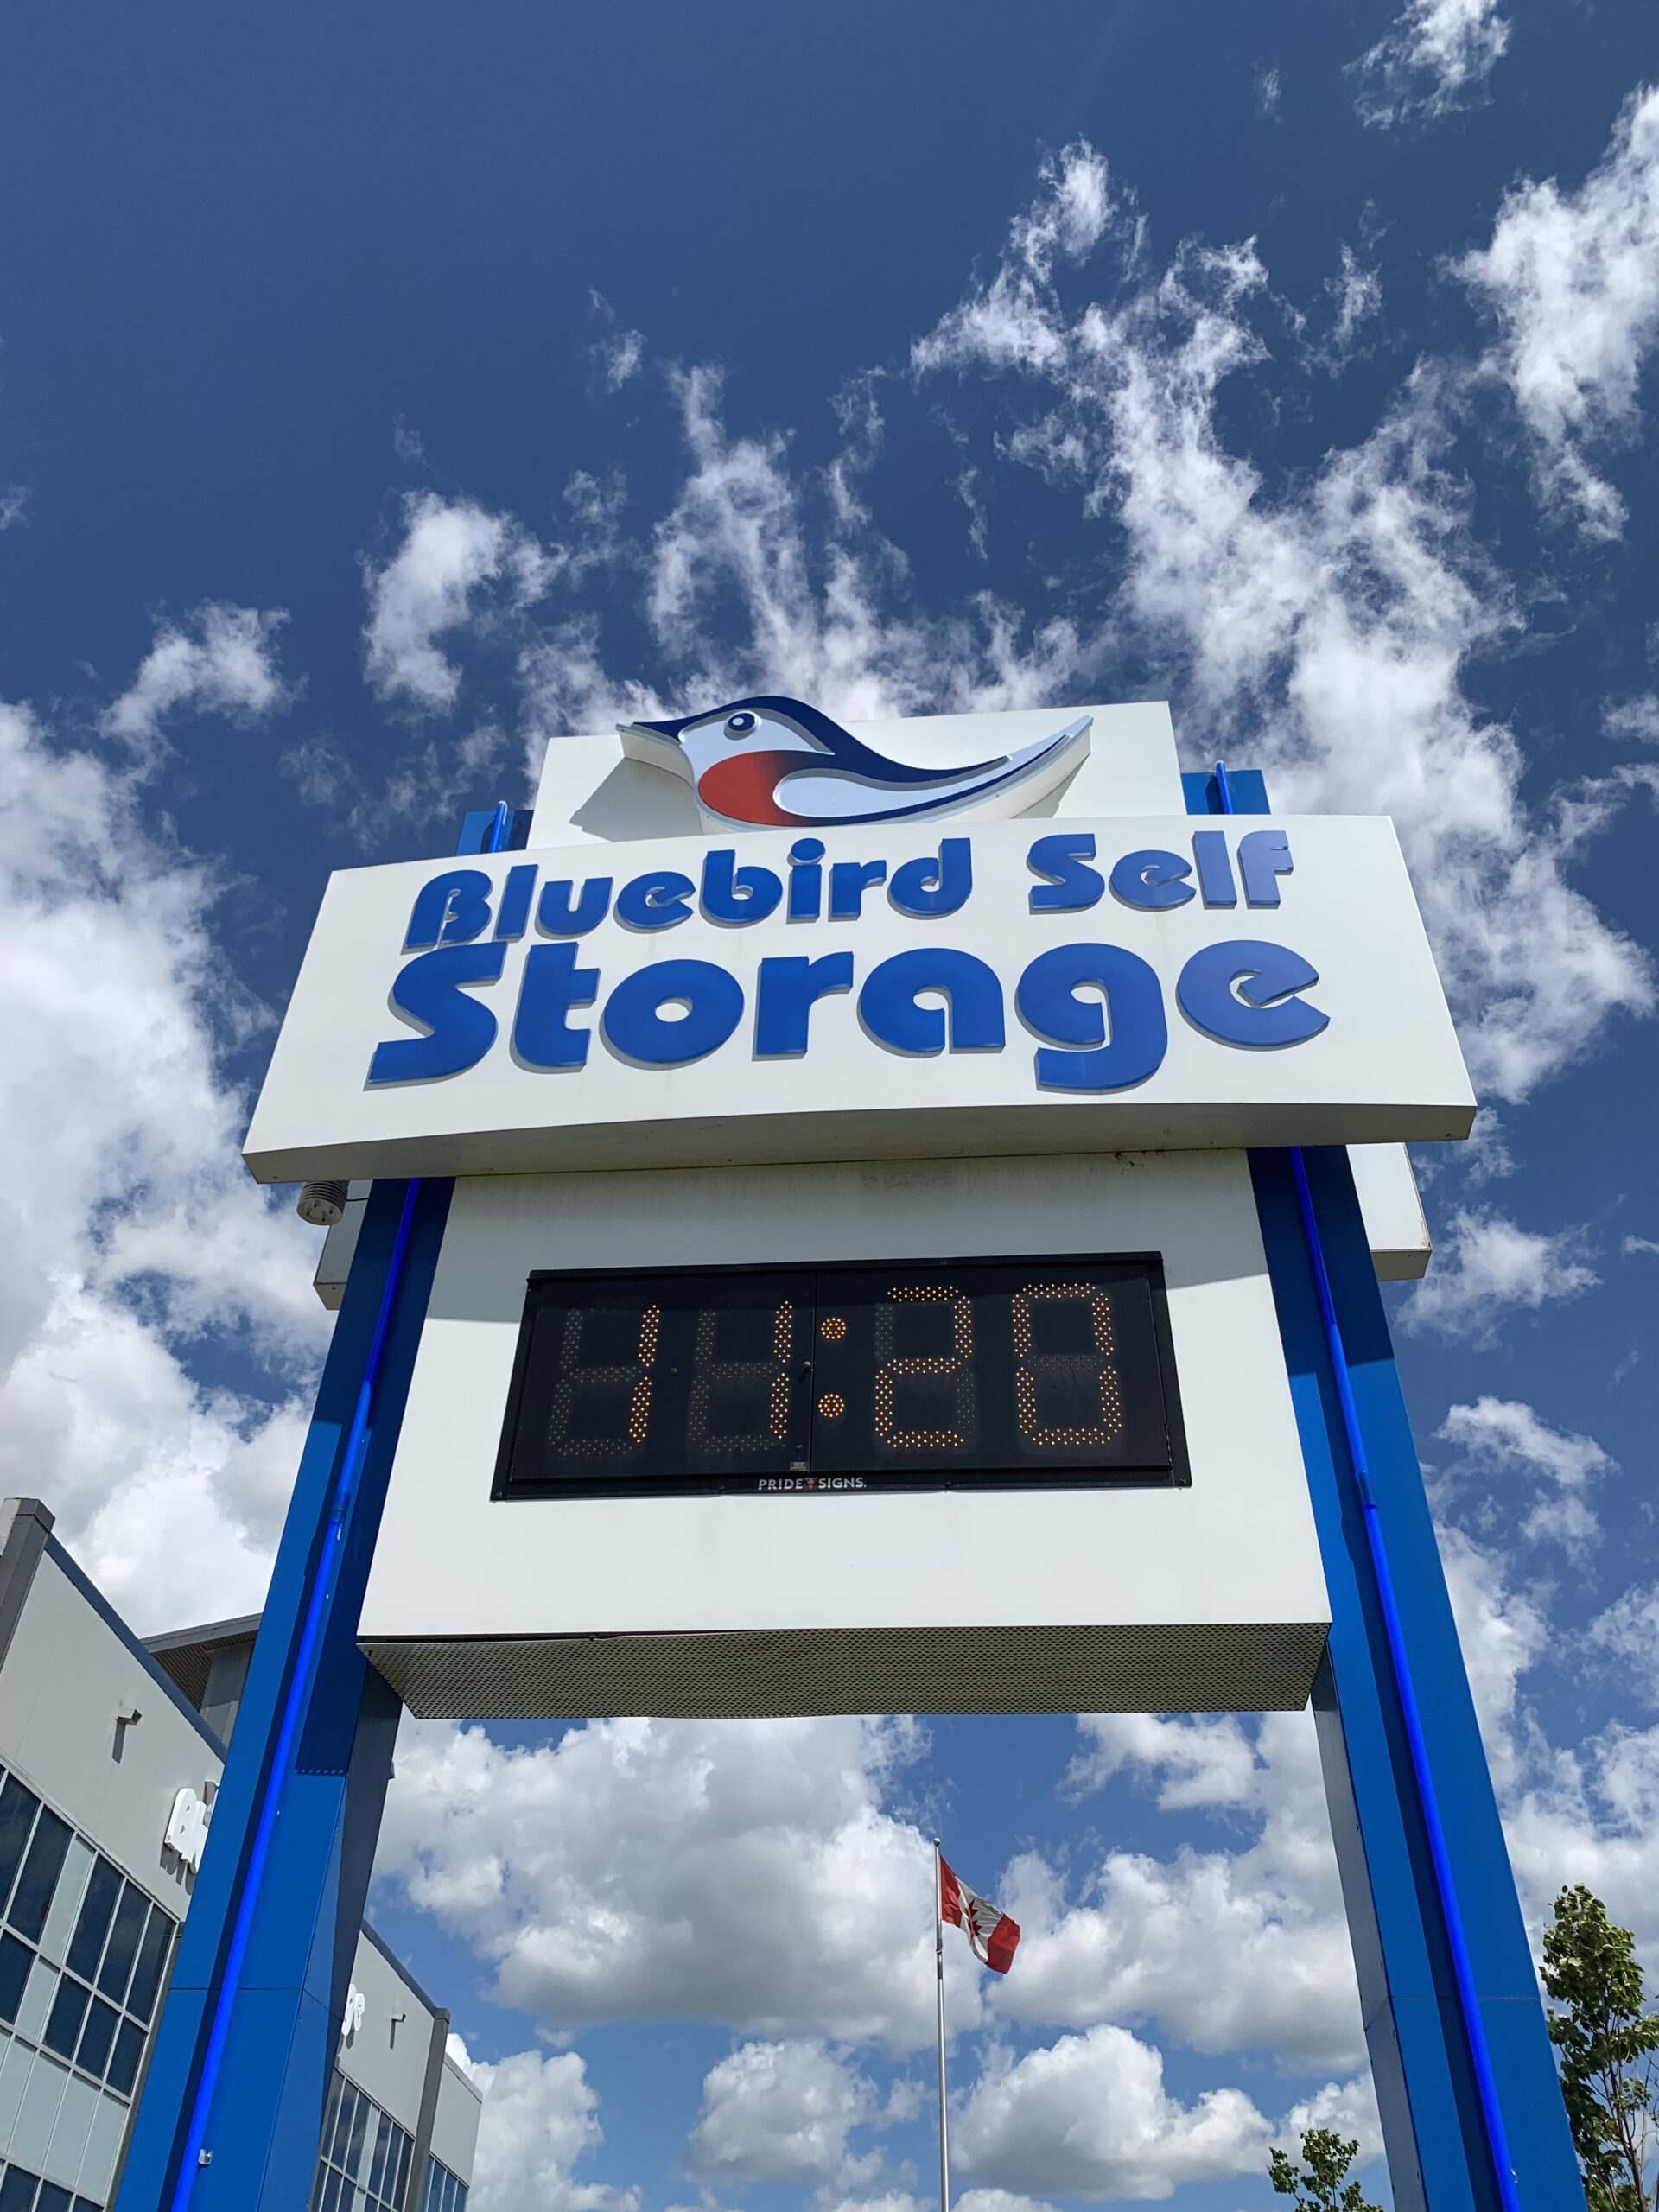 BlueBird Self Storage